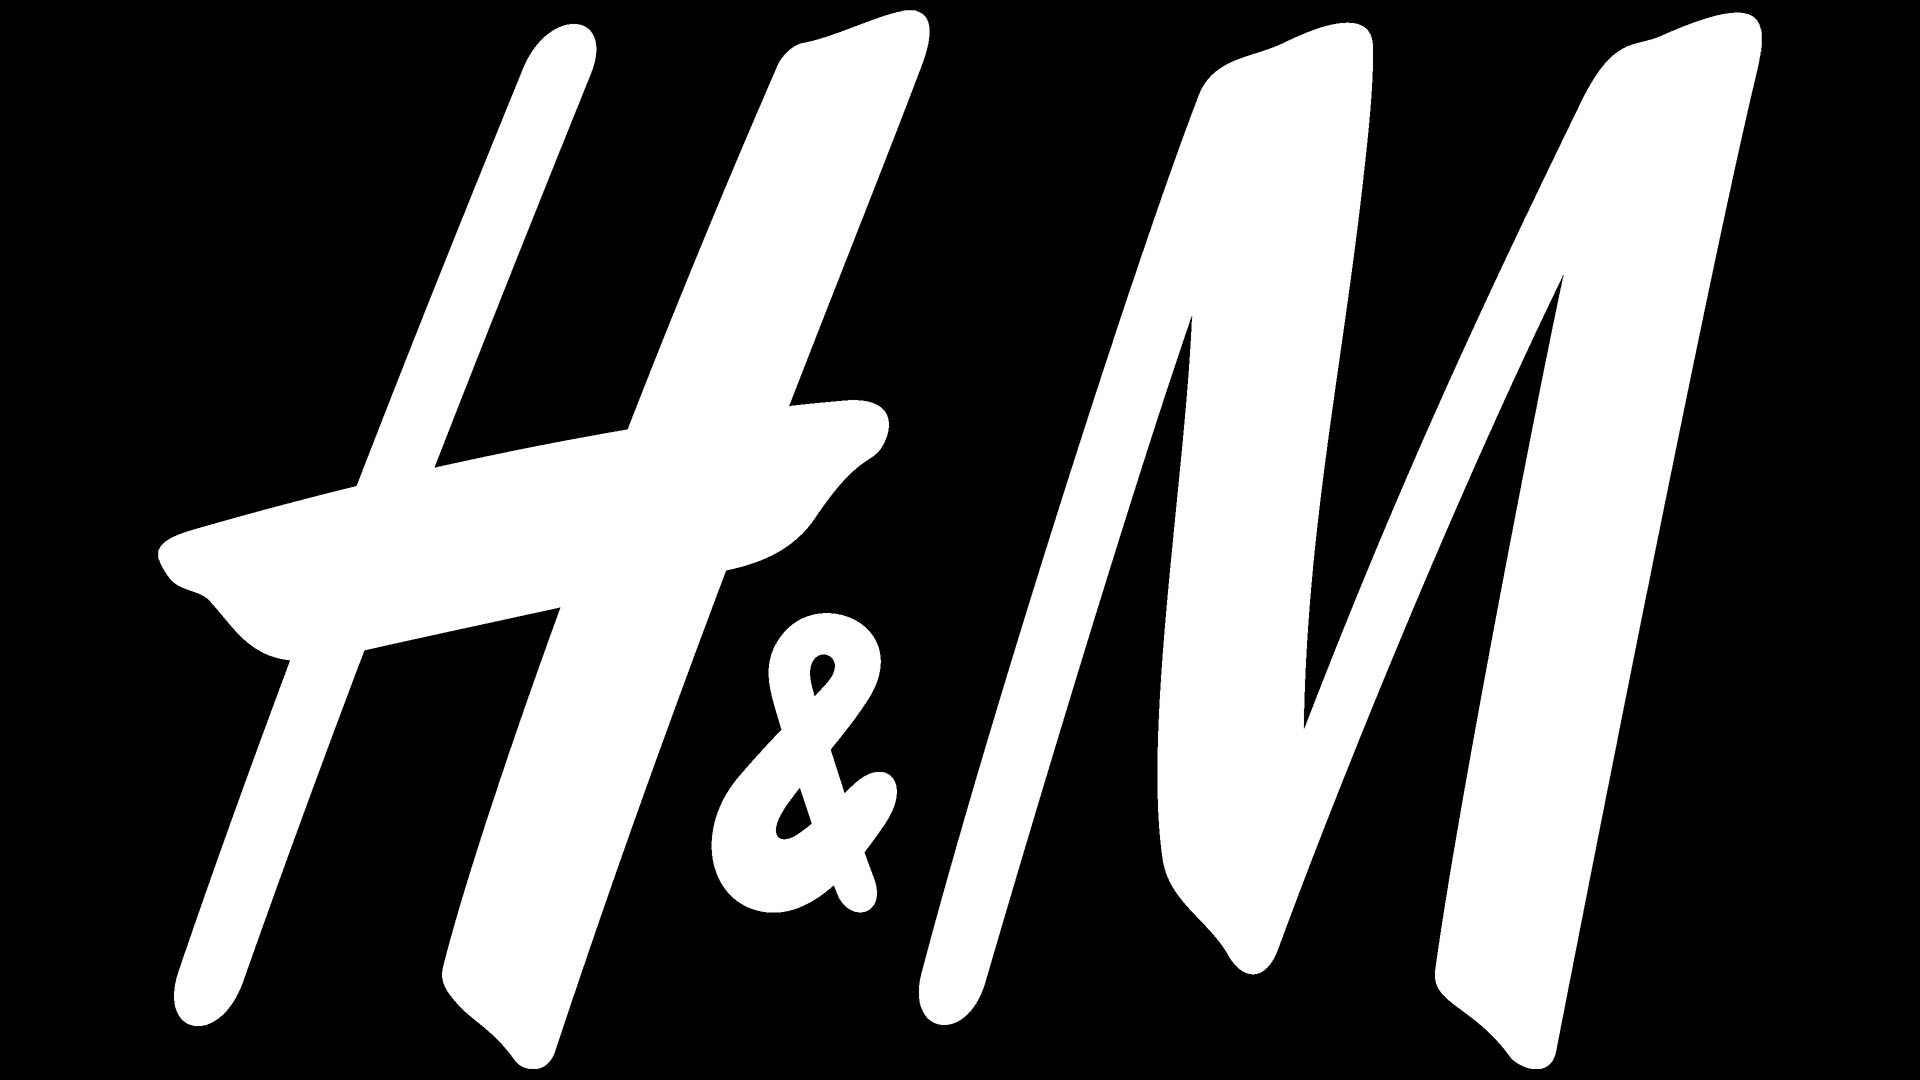 Https m com h. H&M значок. НМ логотип. Наклейка h&m. Логотип HM на одежде.